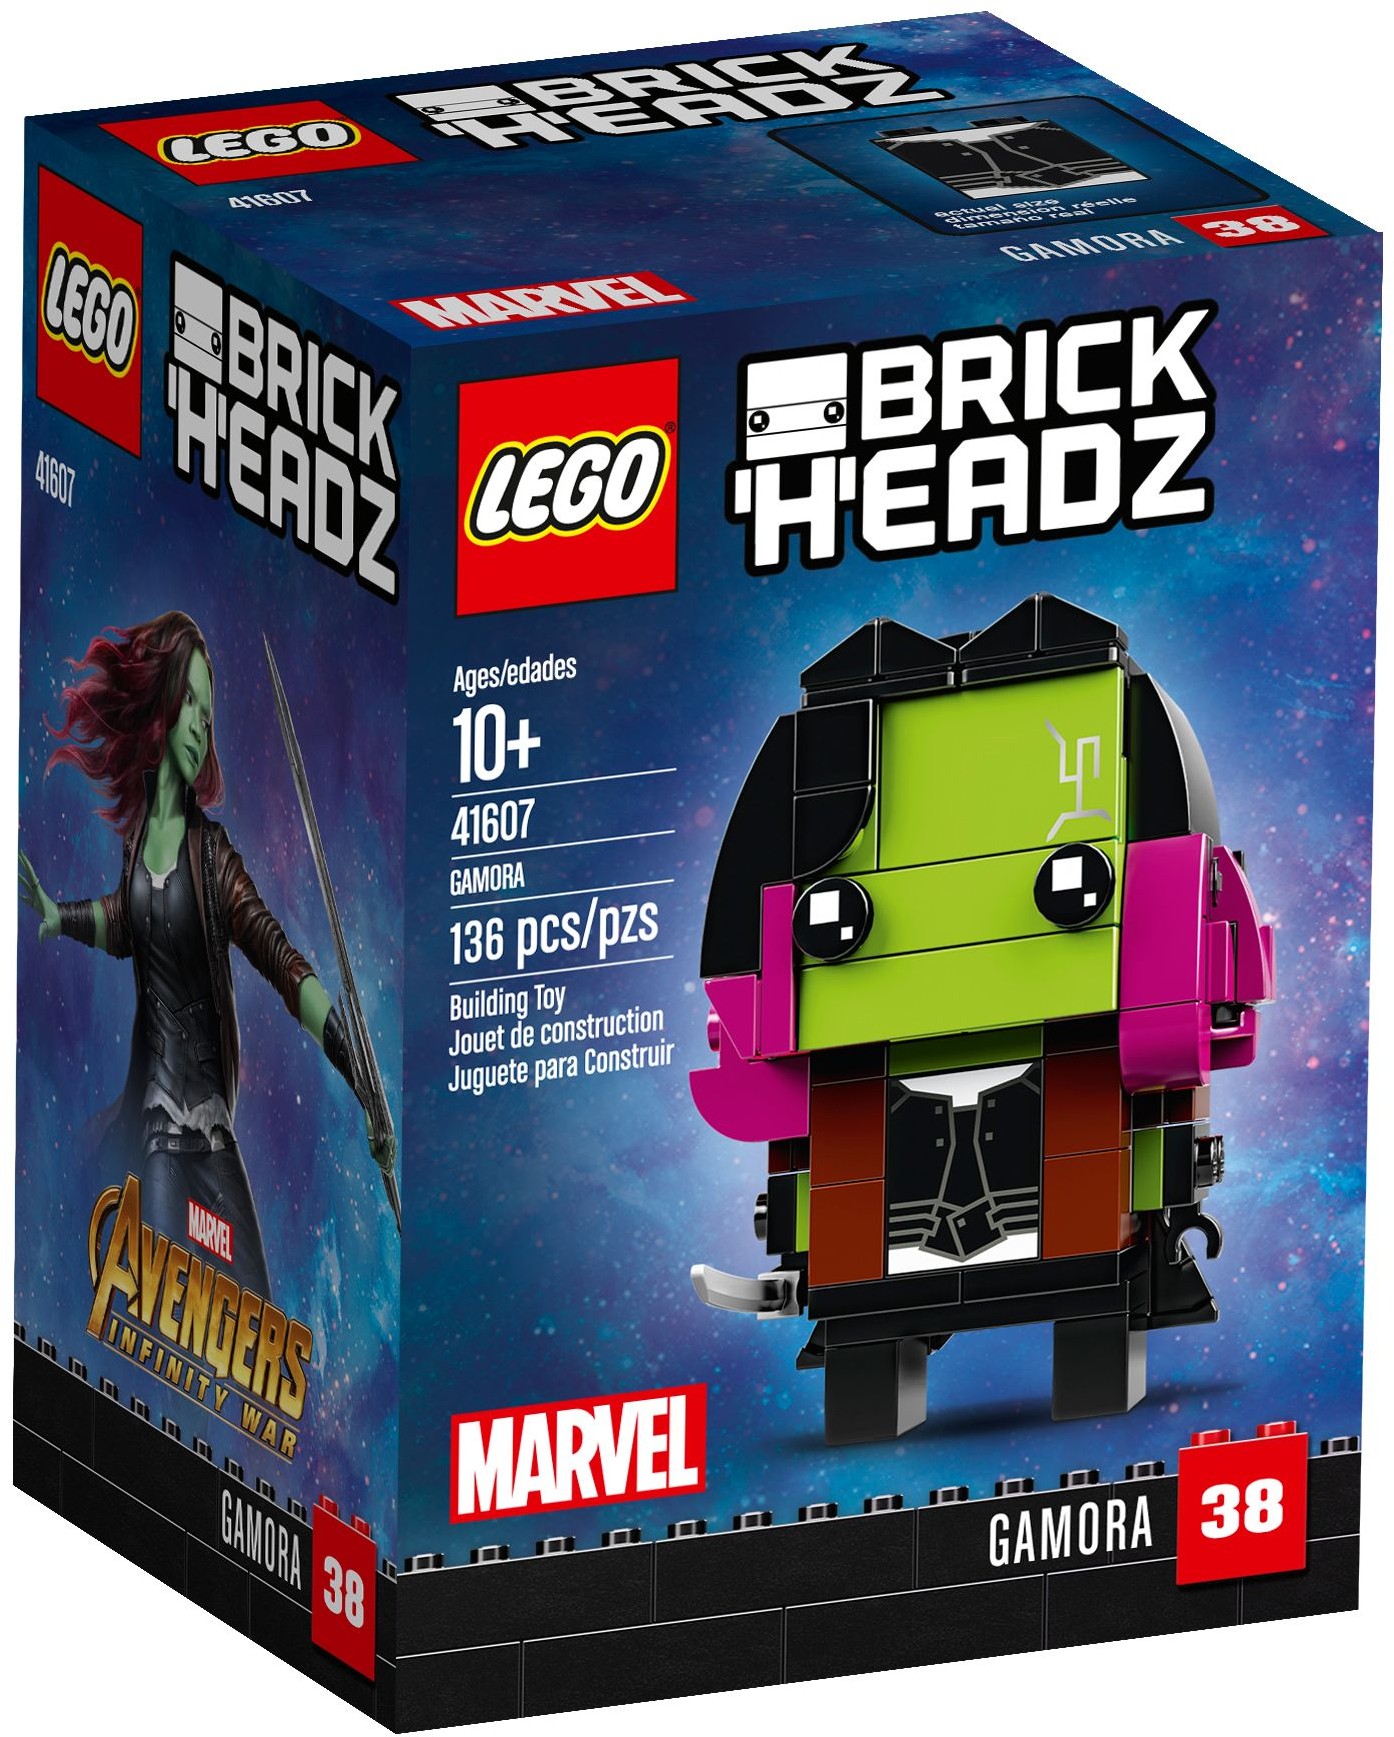 41607 Gamora Brick Headz